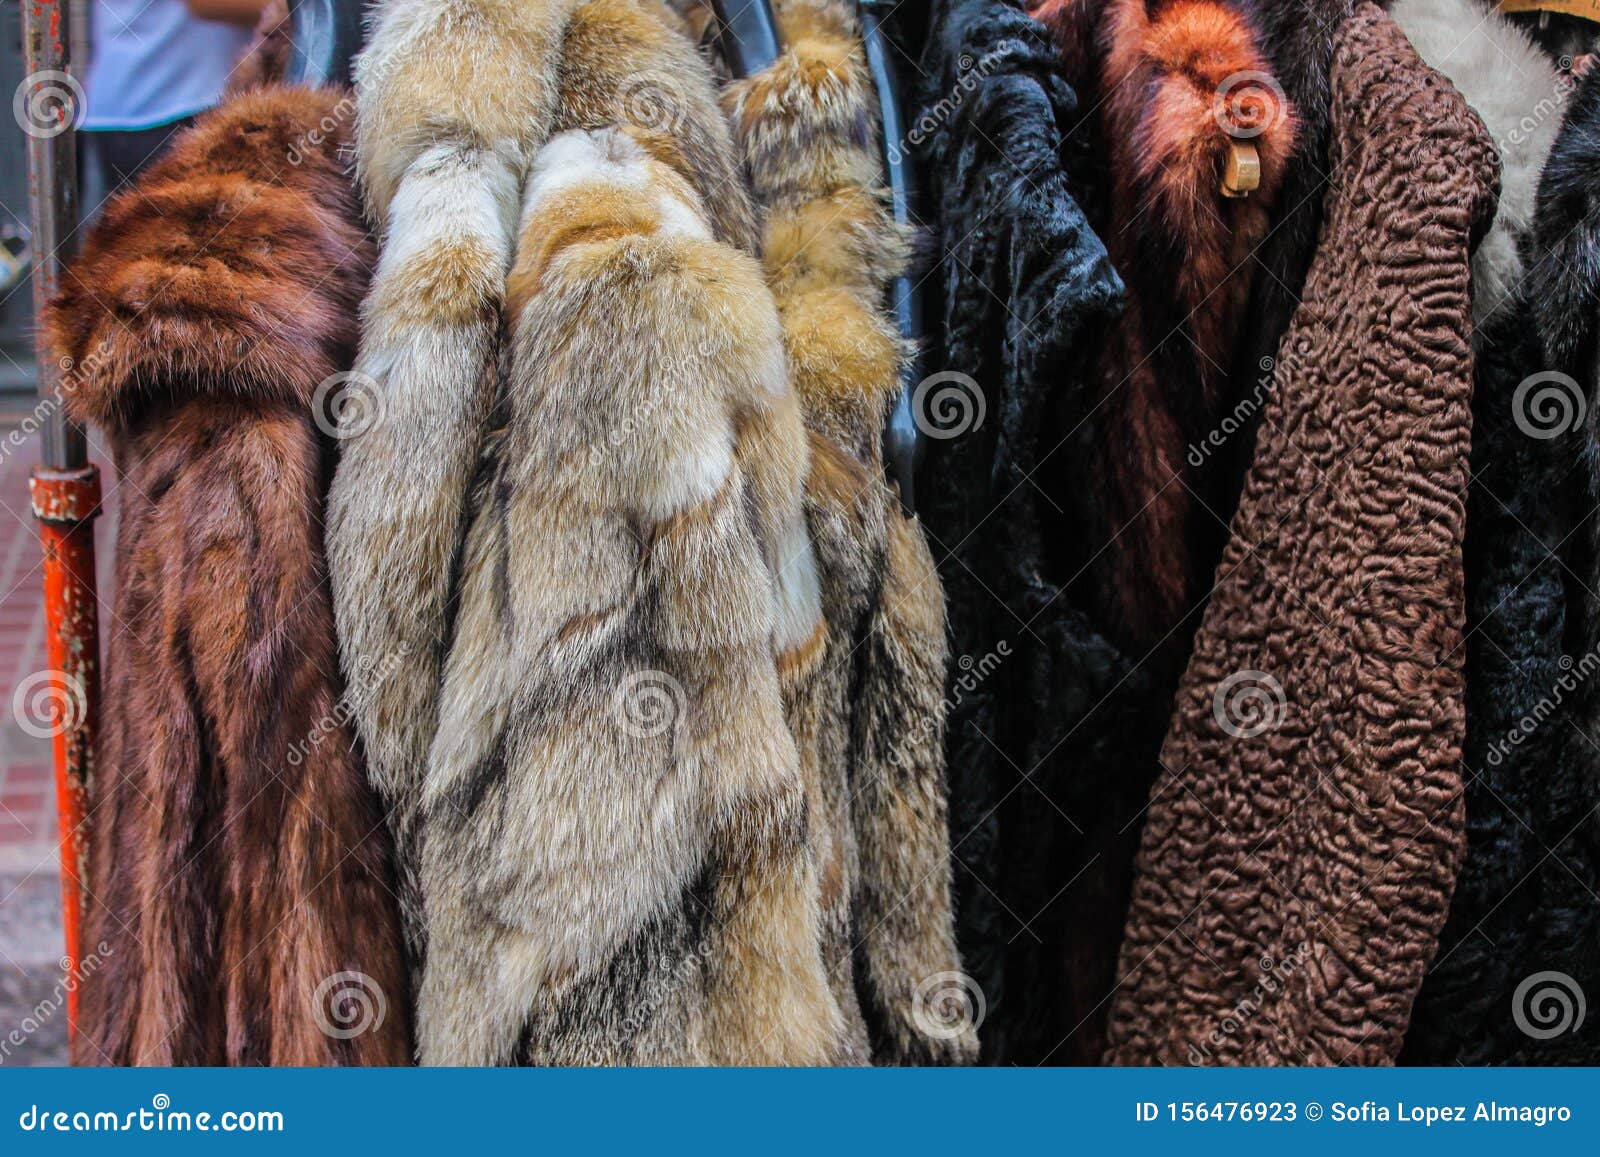 Leather Fur Coat Clothing Clothes Luxury Glamour Stock Image - Image of ...